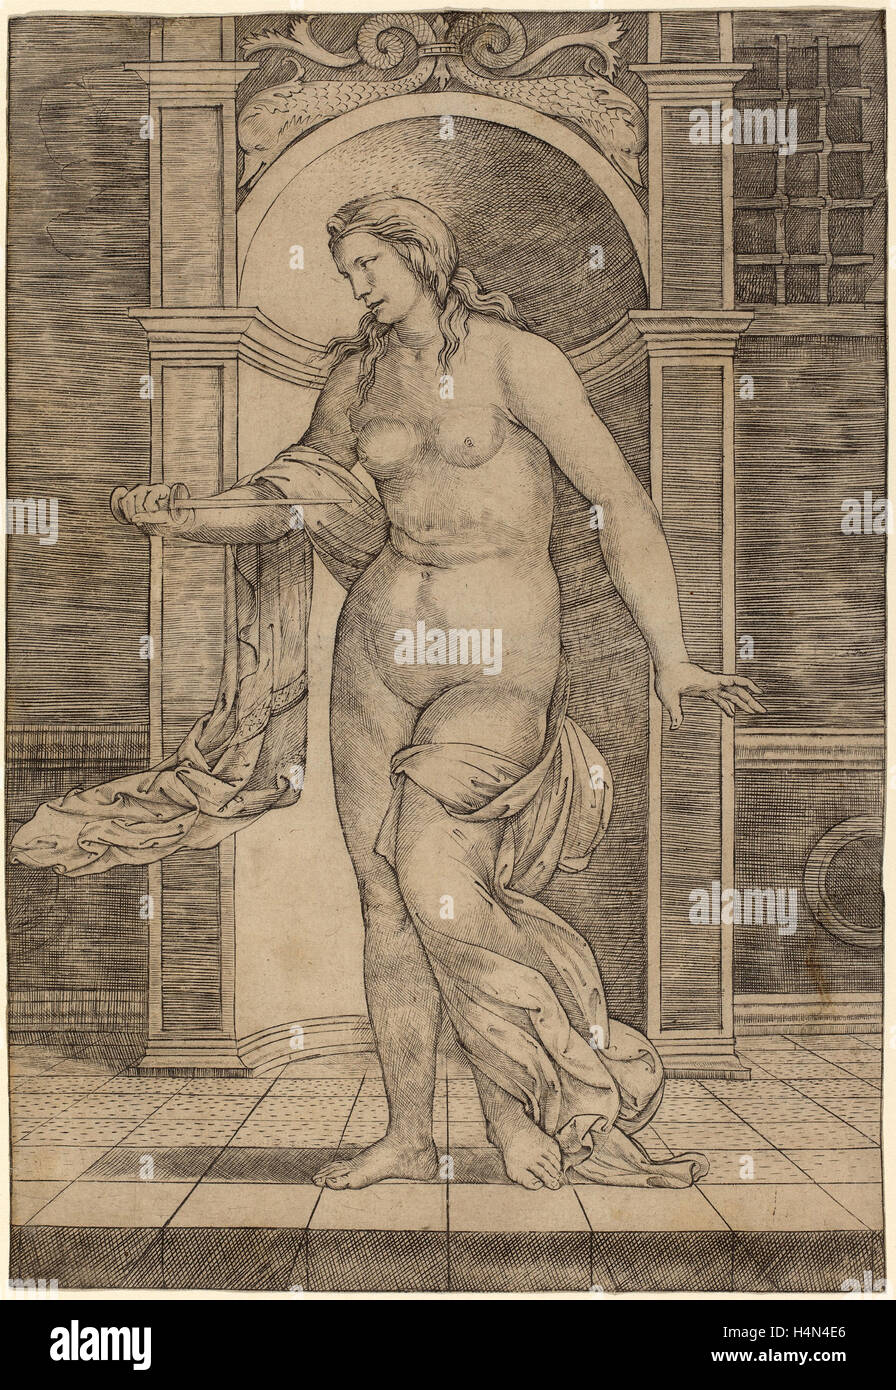 Jacopo Francia (Italian, 1486 or before - 1557), Lucretia, c. 1510, engraving Stock Photo